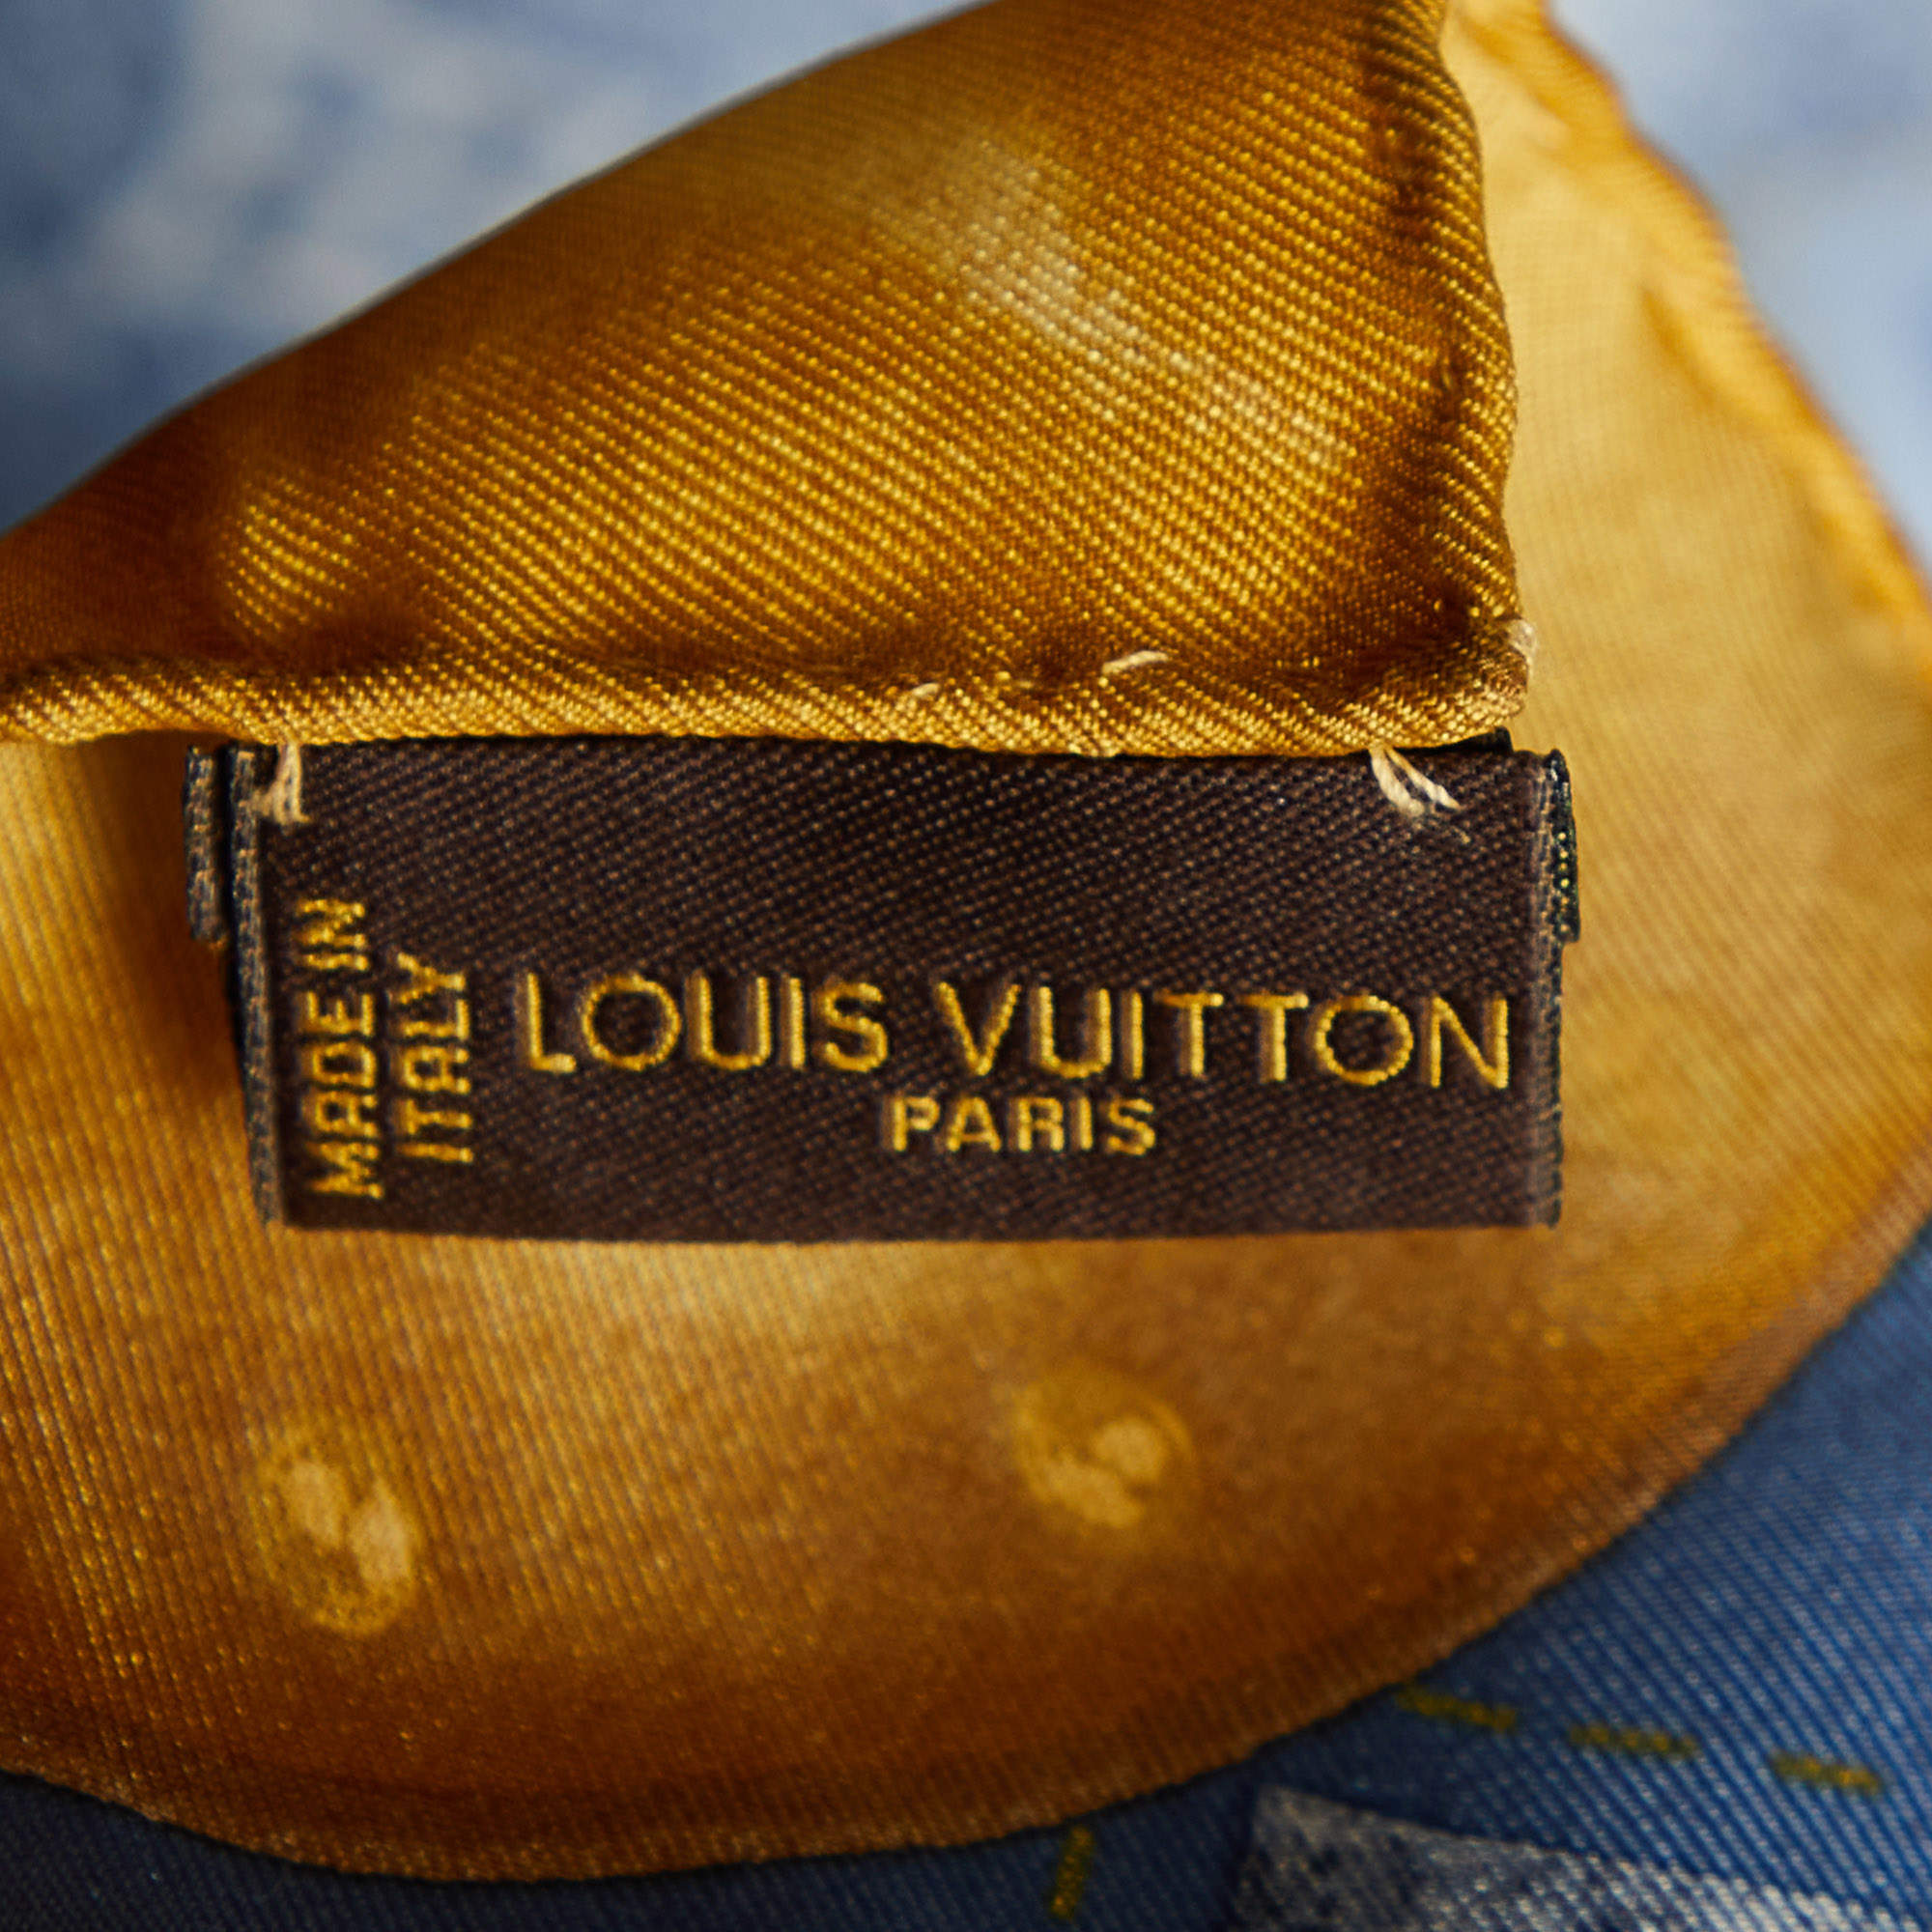 Louis Vuitton Monogram Denim Scarf Silk Blue Yellow M71897 90x90cm